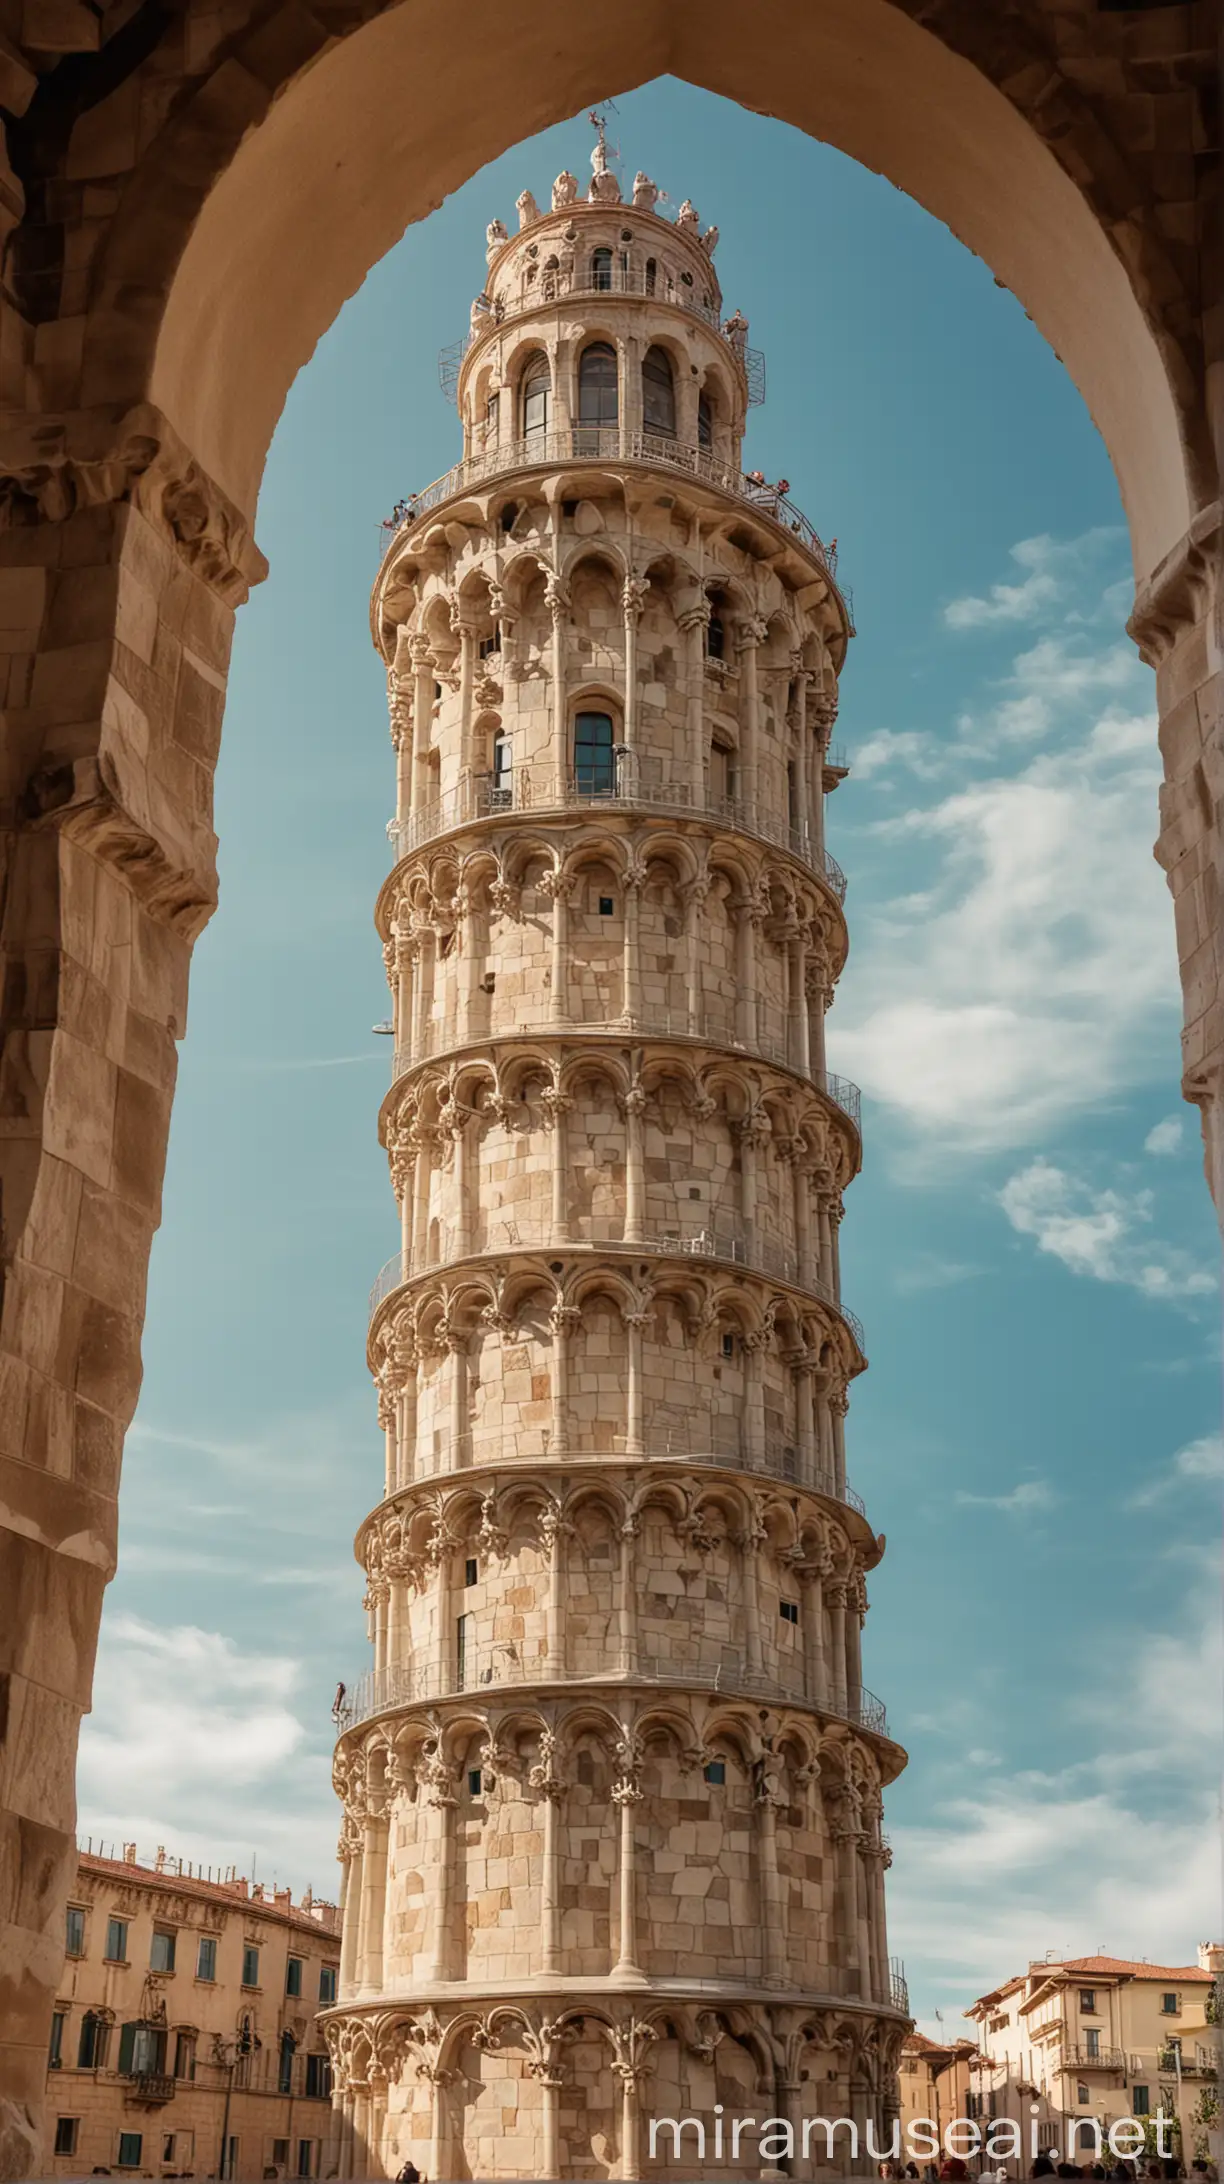 the tower of pisa built by gaudi